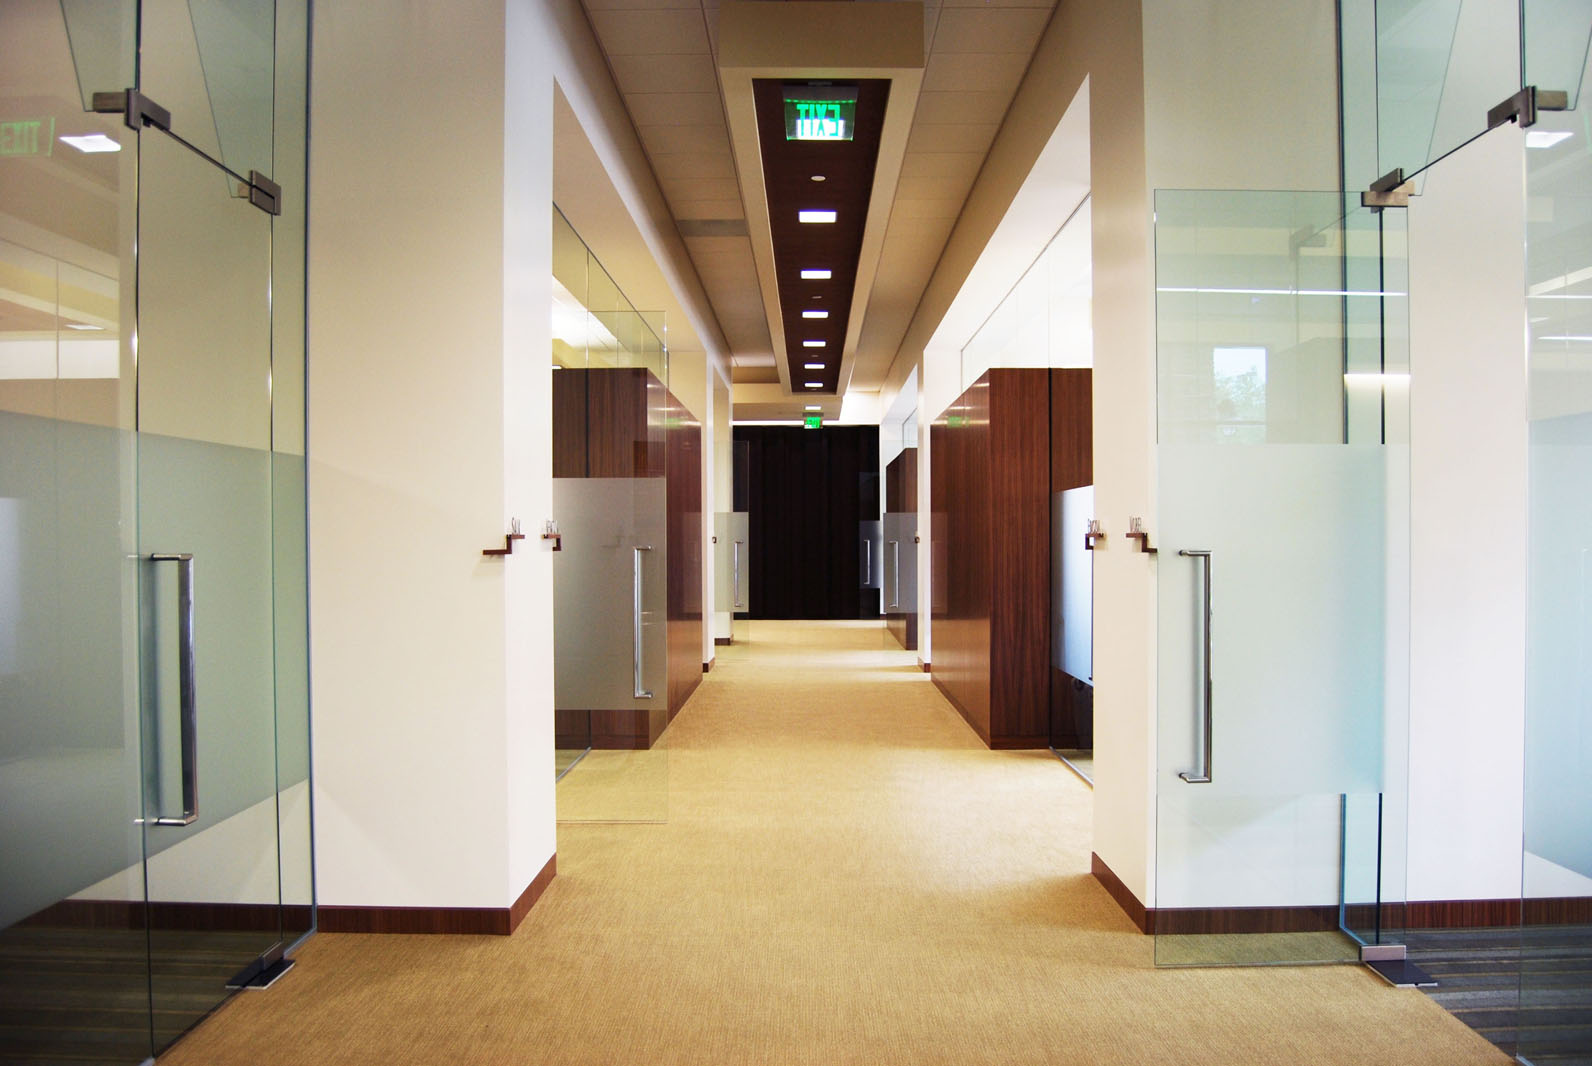 Knobbe Martens hallway